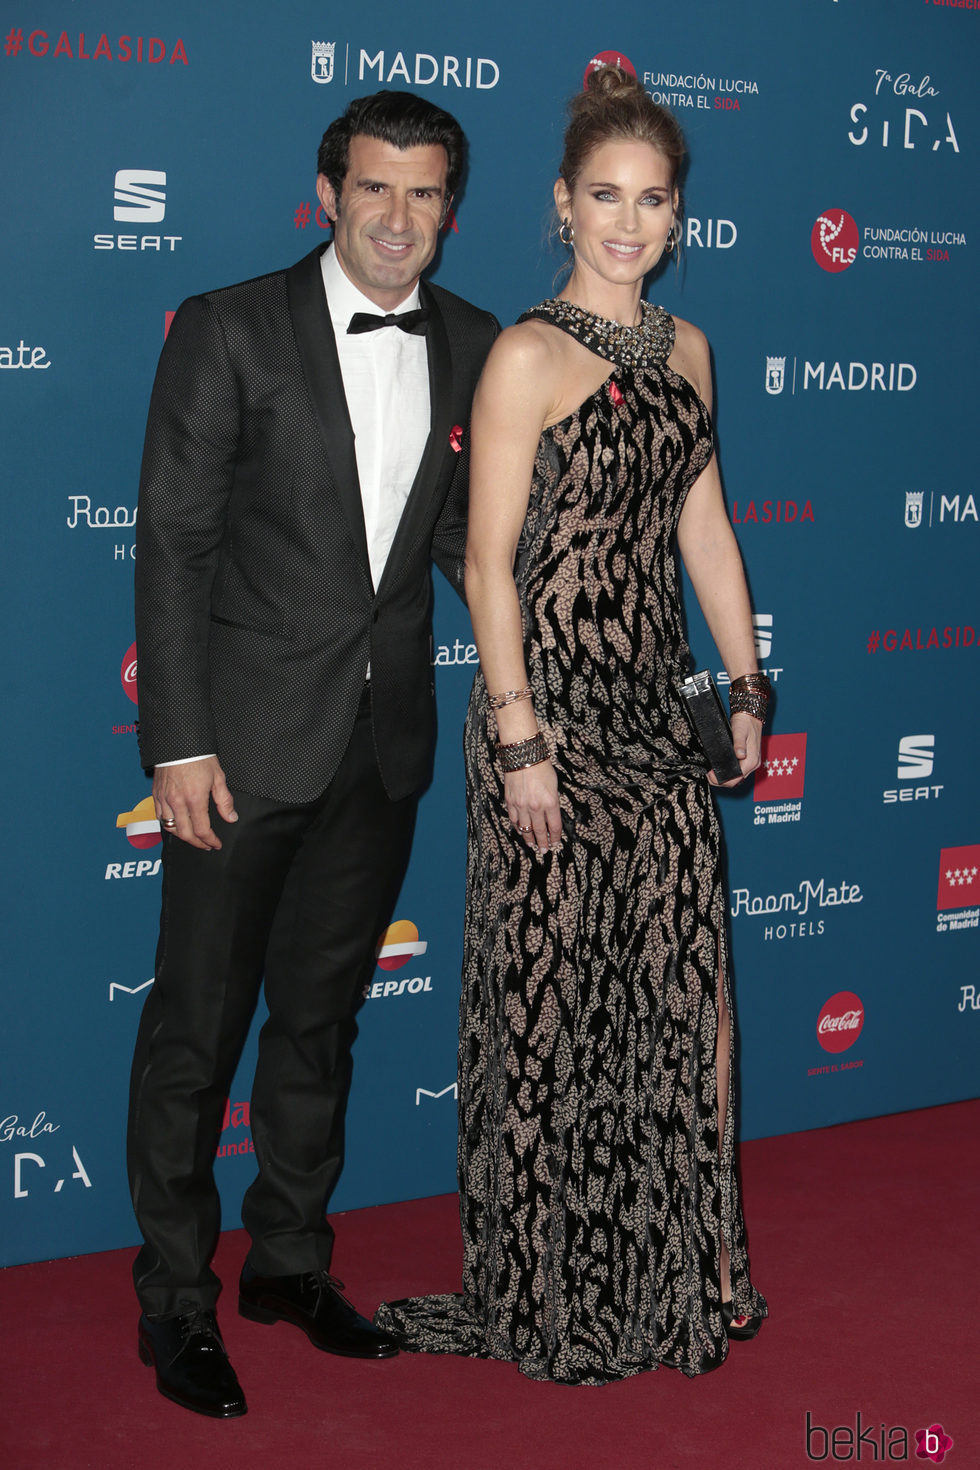 Luis Figo y Helen Svedin en la Gala Sida 2016